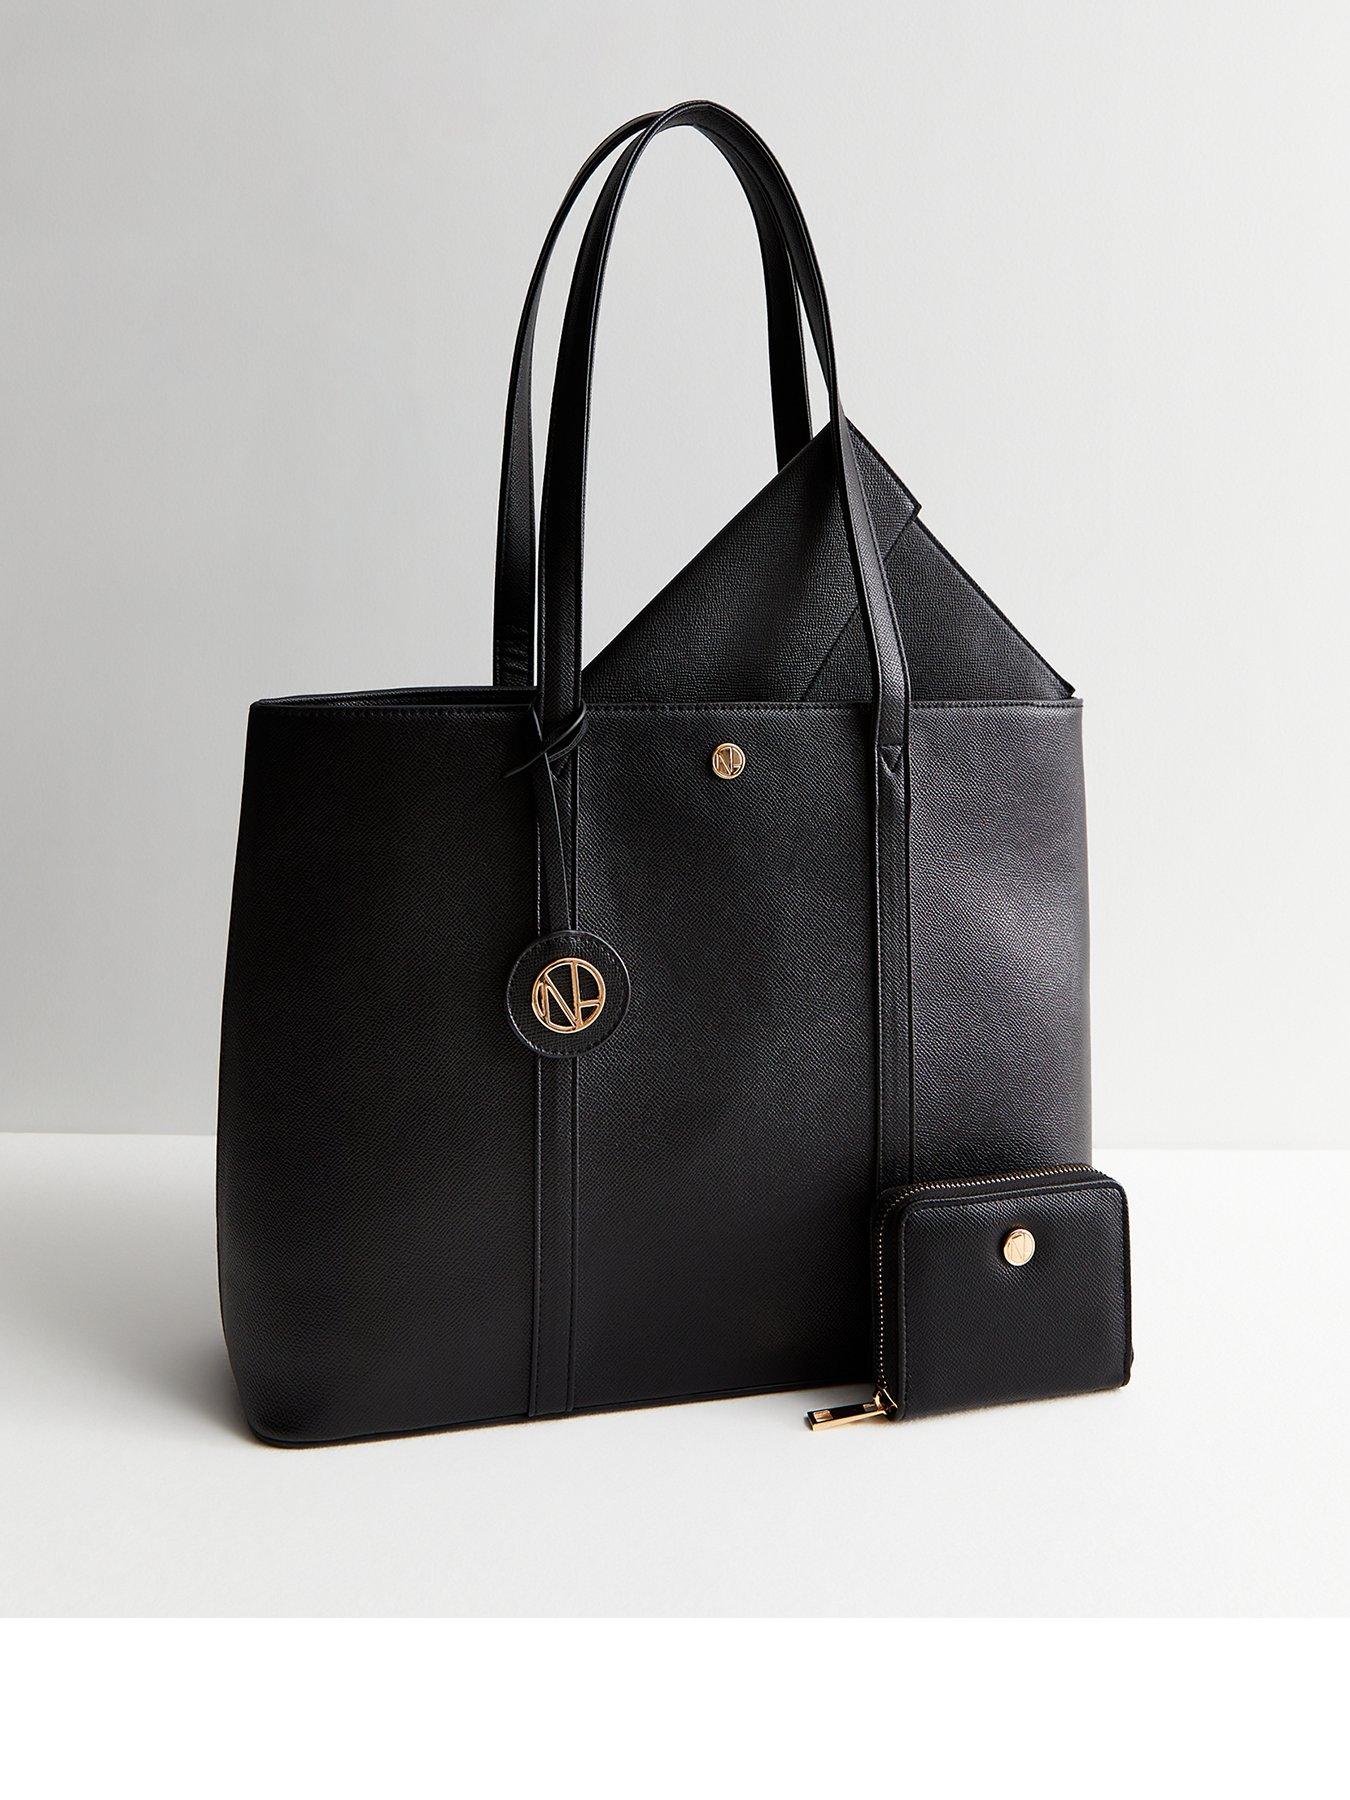 Buy Stylish Women Handbags Ladies Purse Handbag PU Leather Shoulder Bags  Leather Handbags Grey at Amazon.in